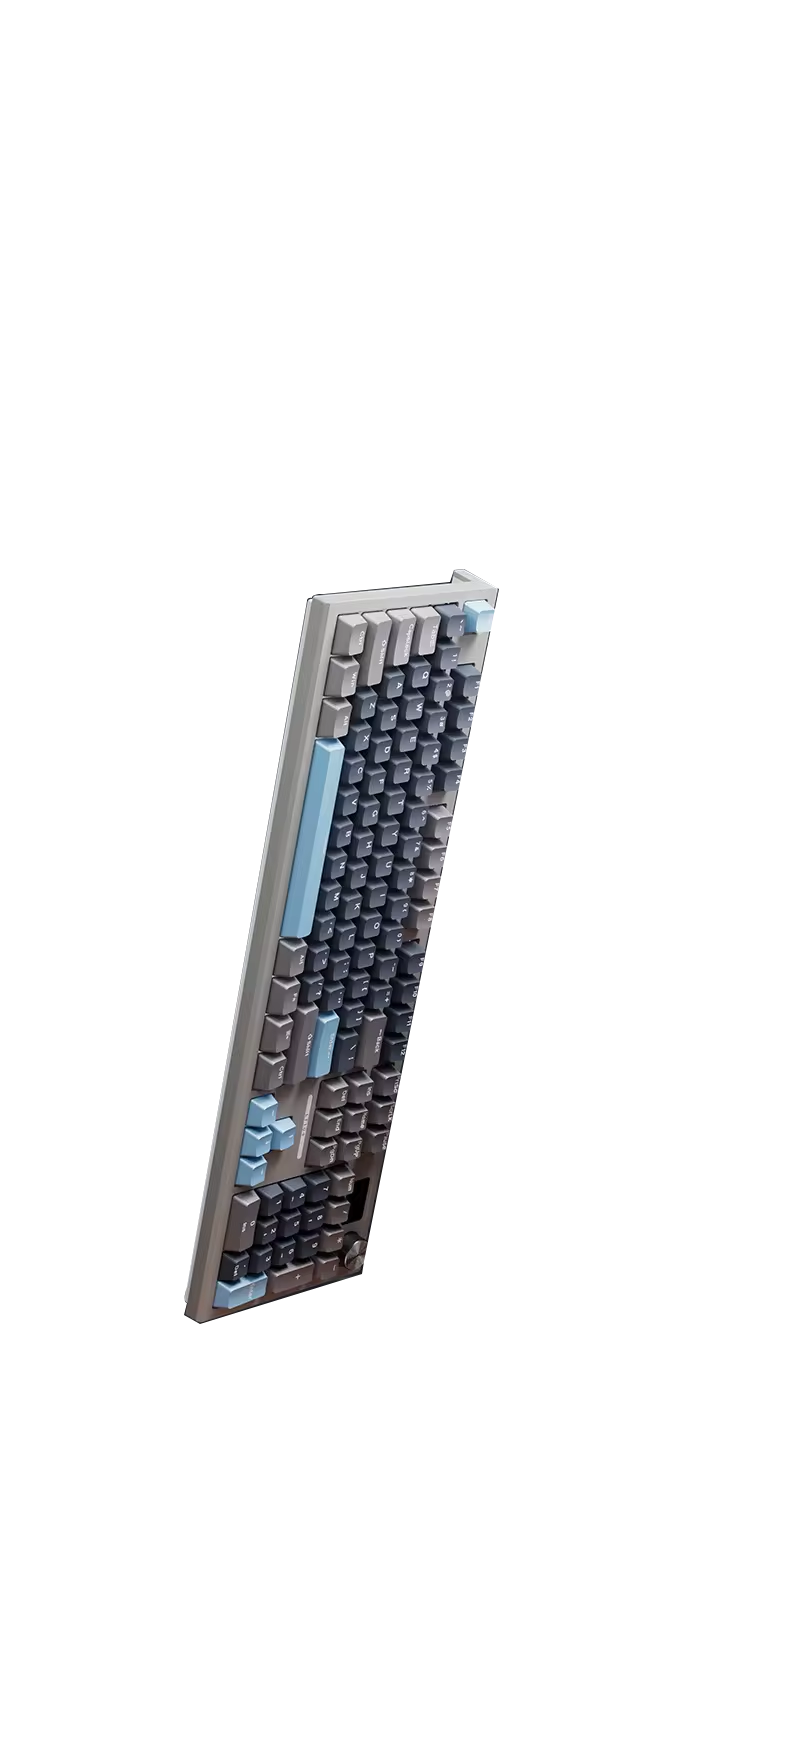 Wireless Gaming Mechanical Keyboard Full Size